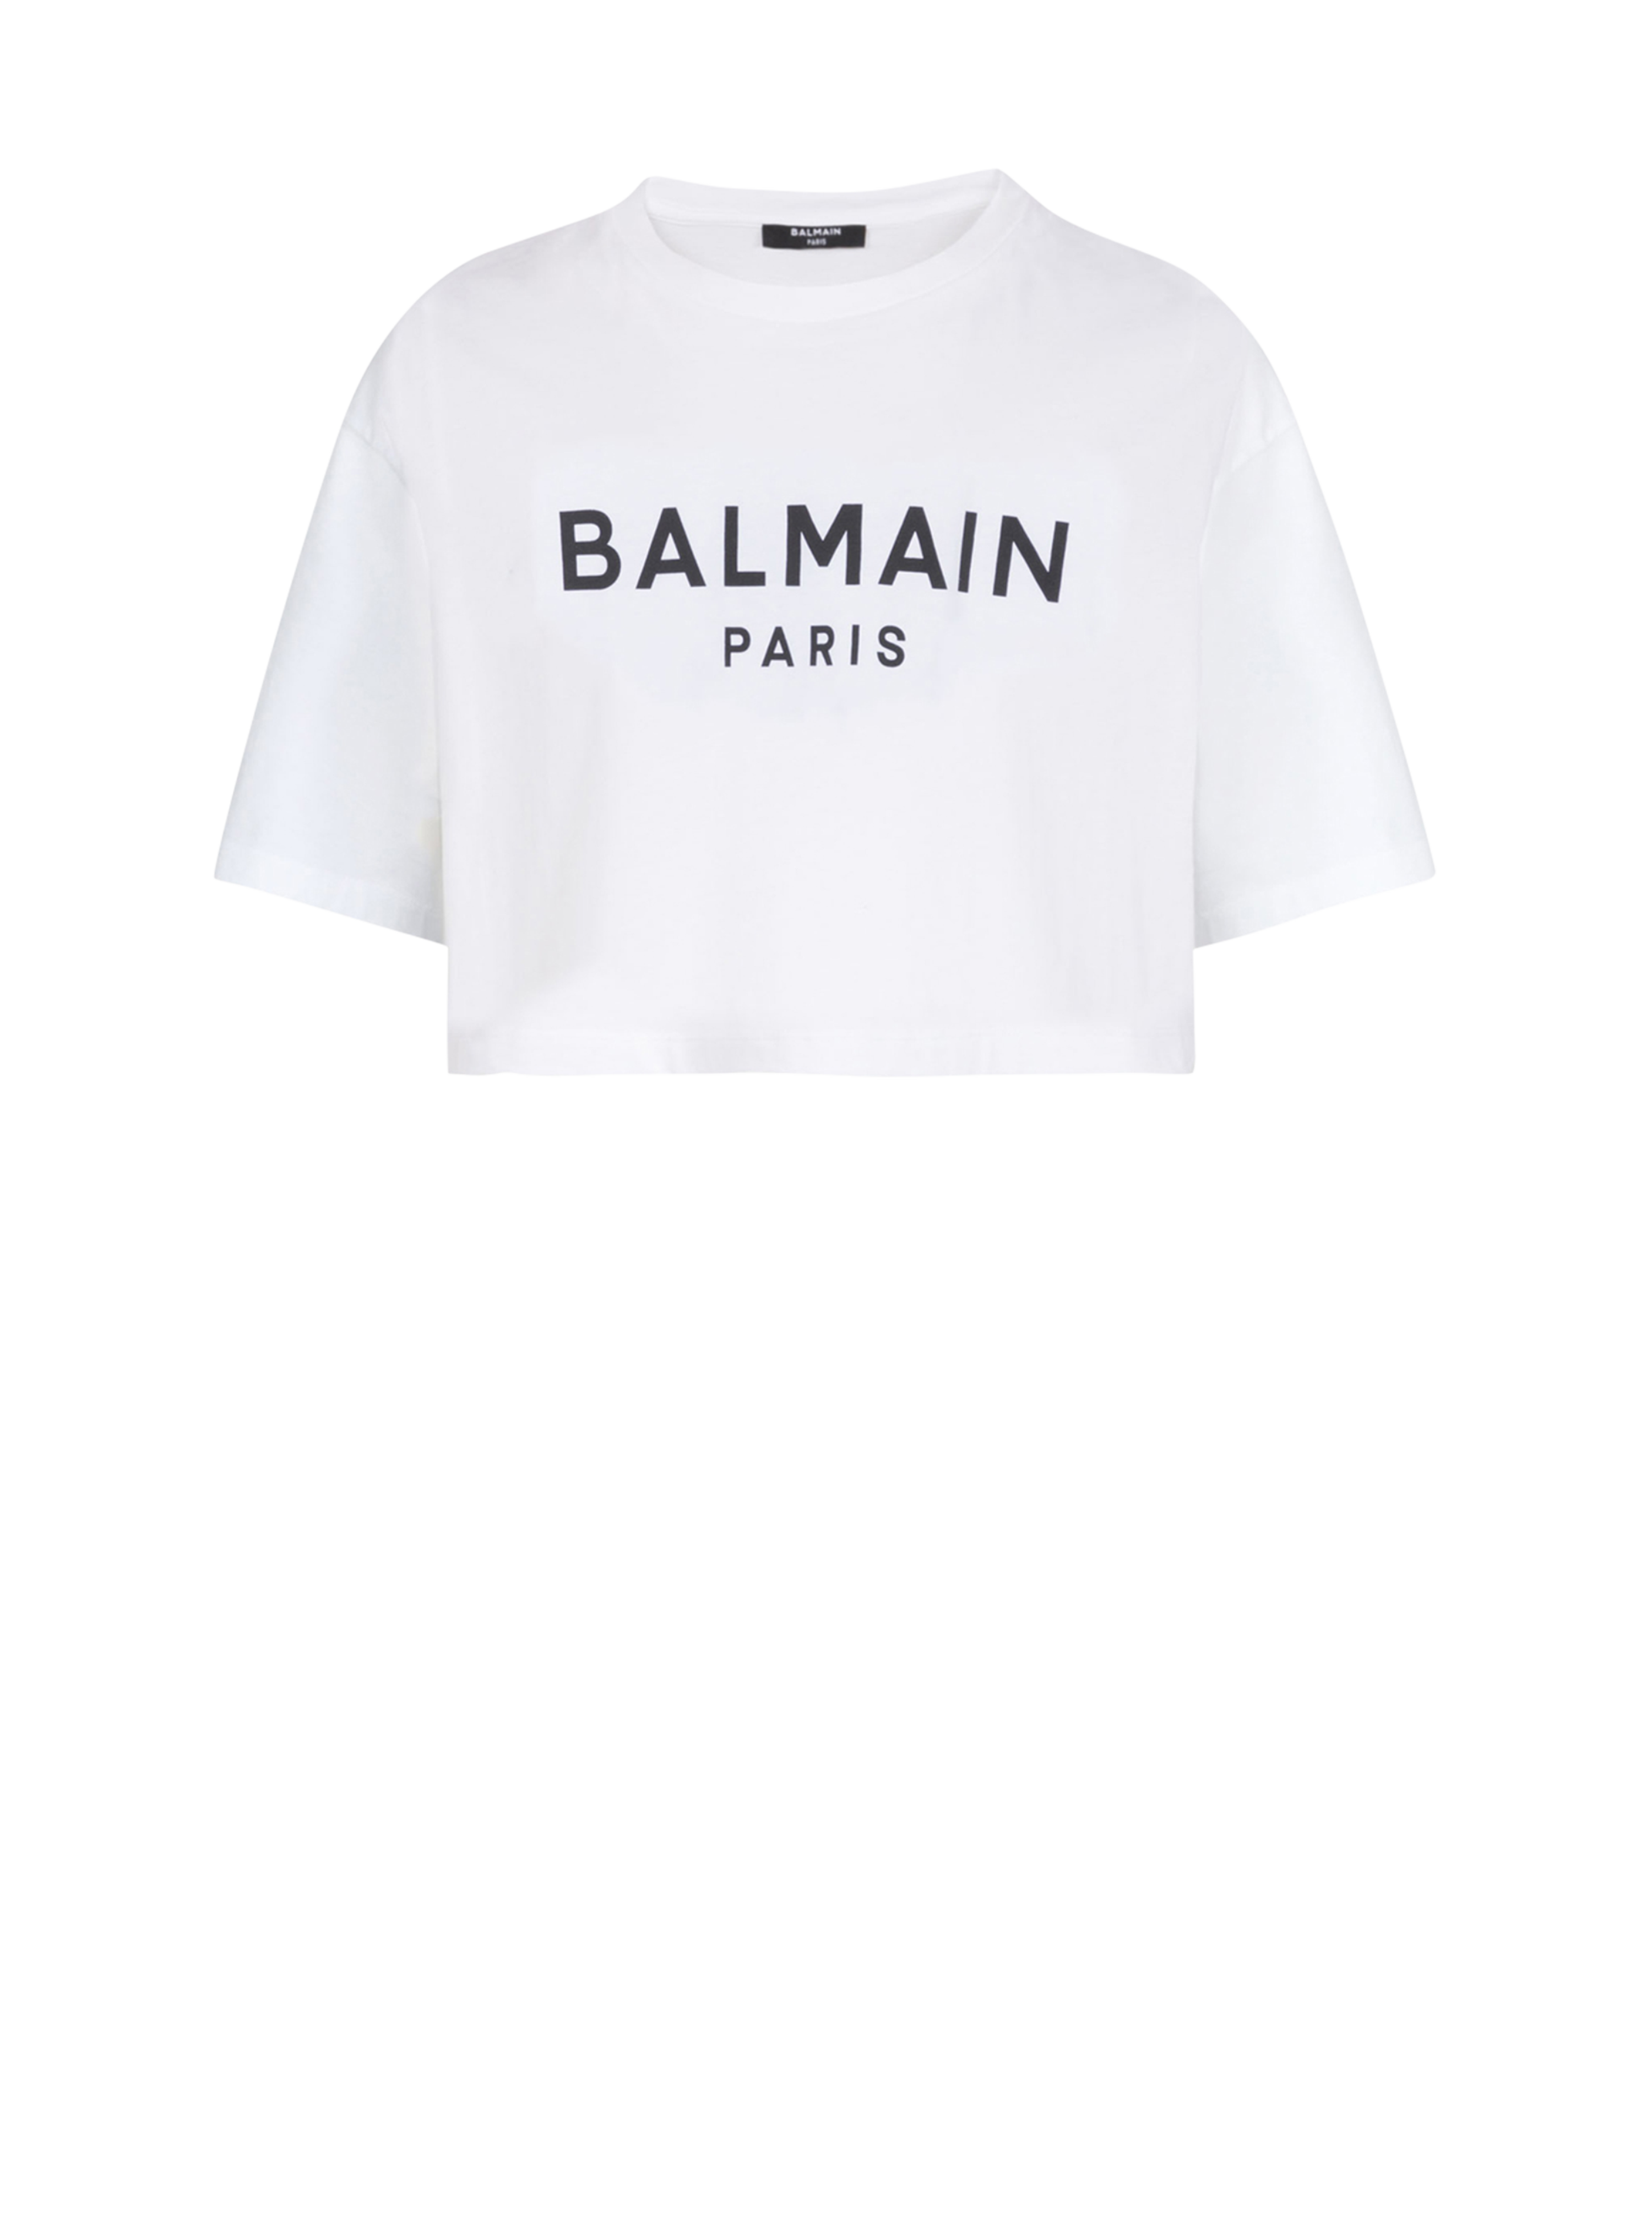 Eco-responsible cropped cotton T-shirt with Balmain logo print, white